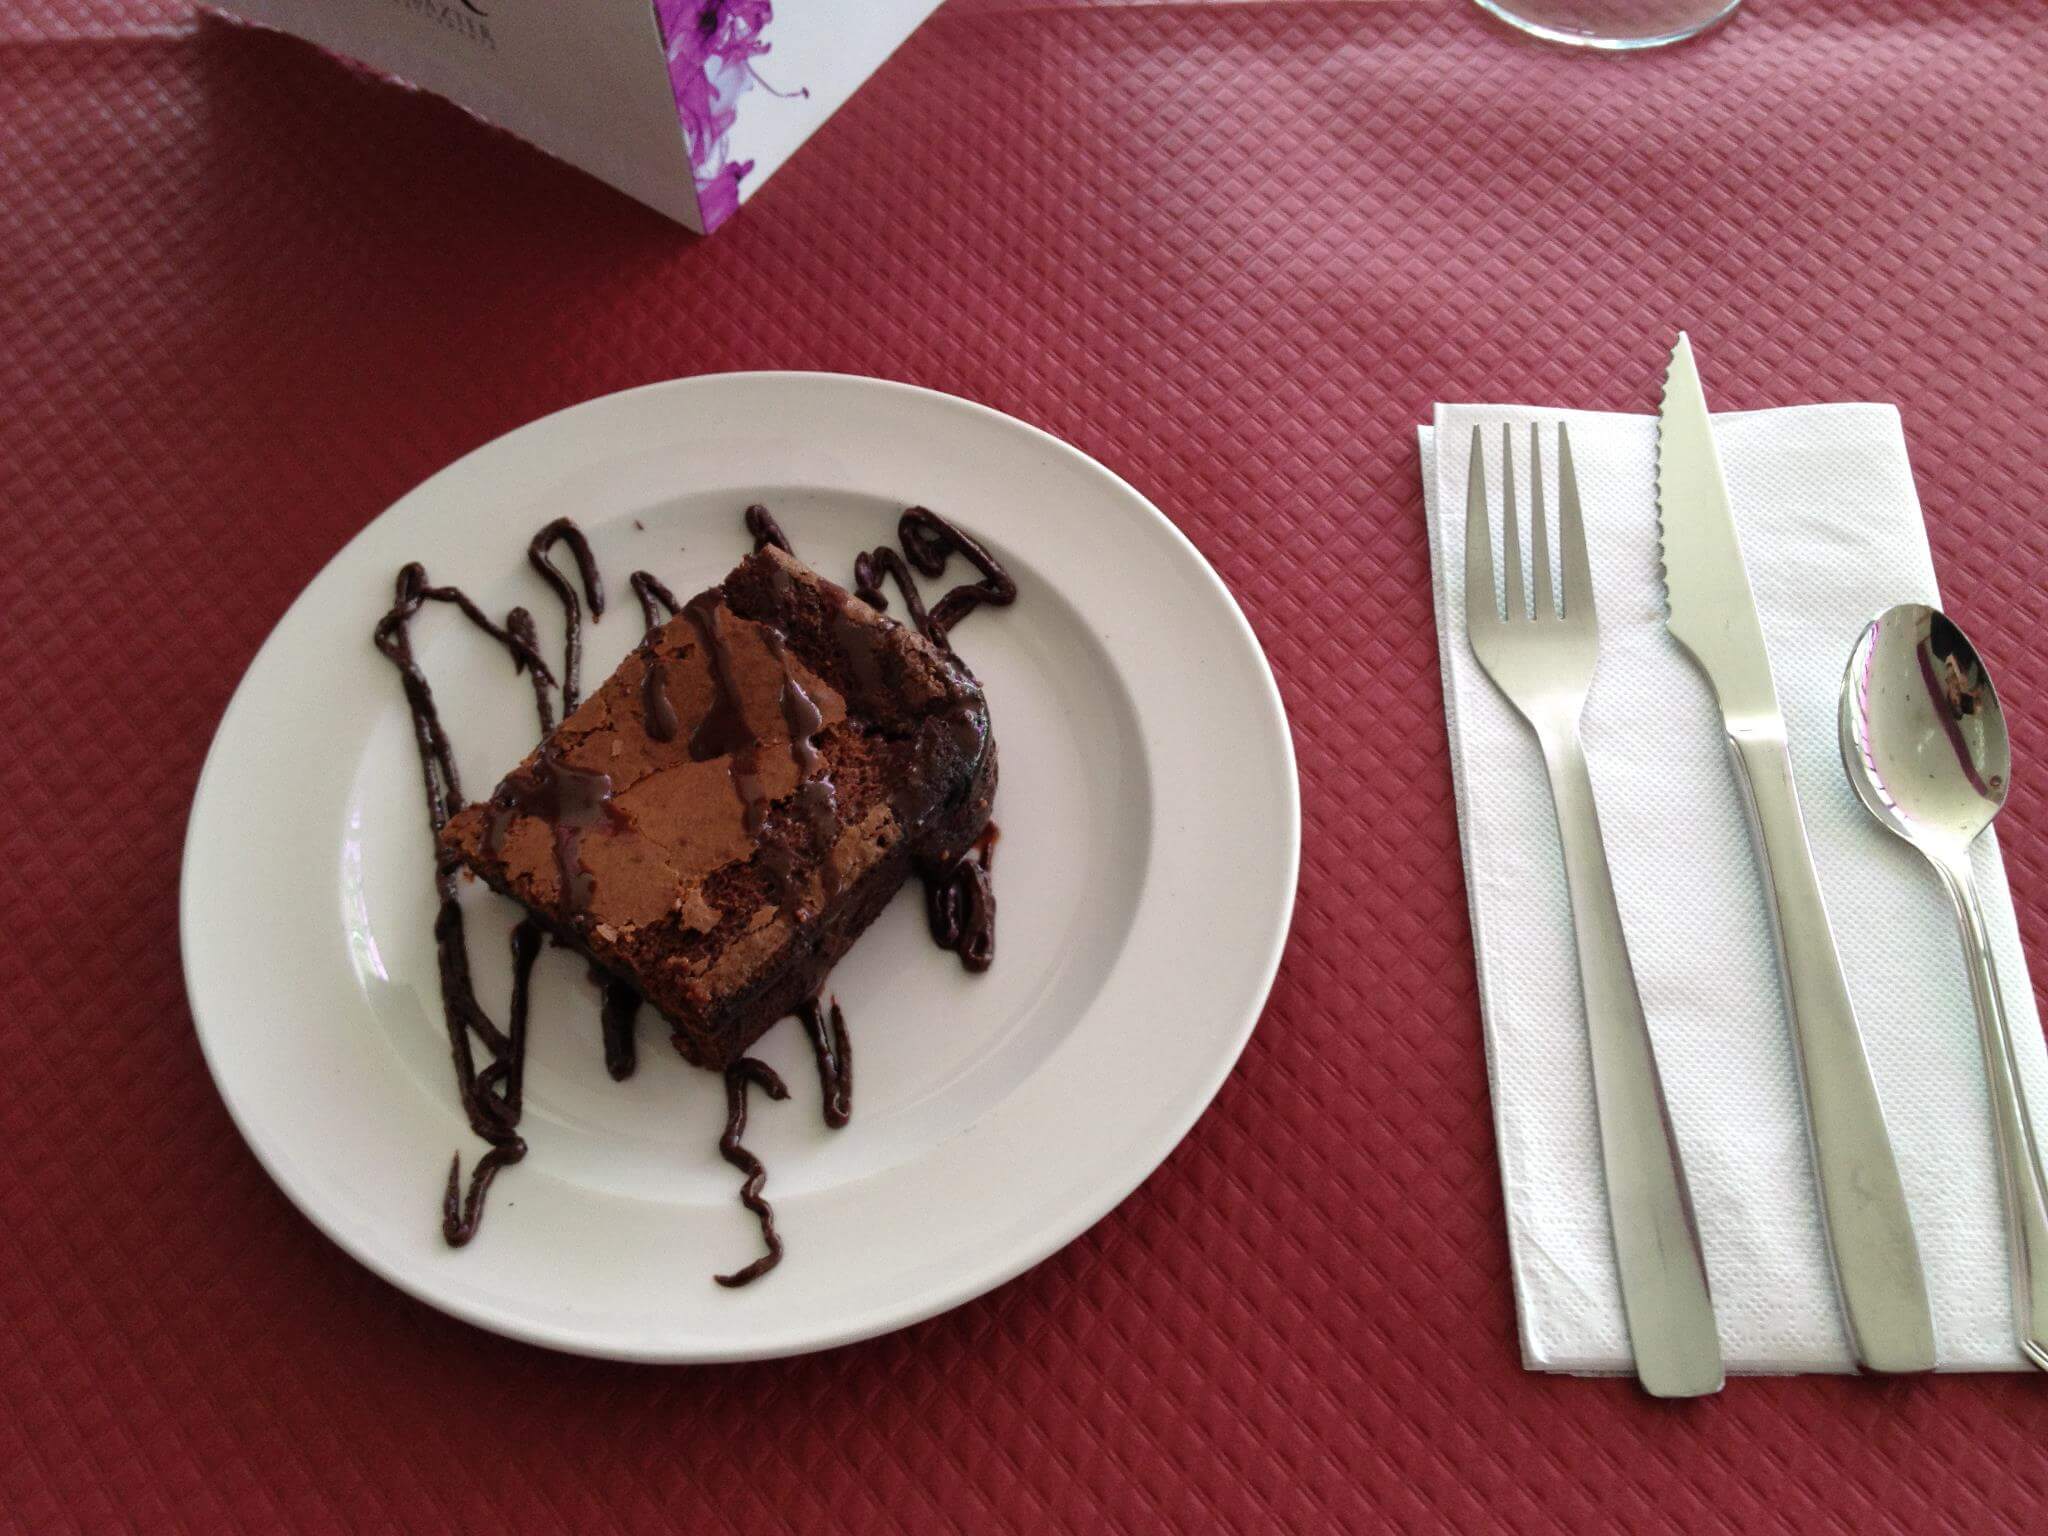 brownie-de-chocolate-restaurante-urbazter-uribarri-ganboa-alava.jpg